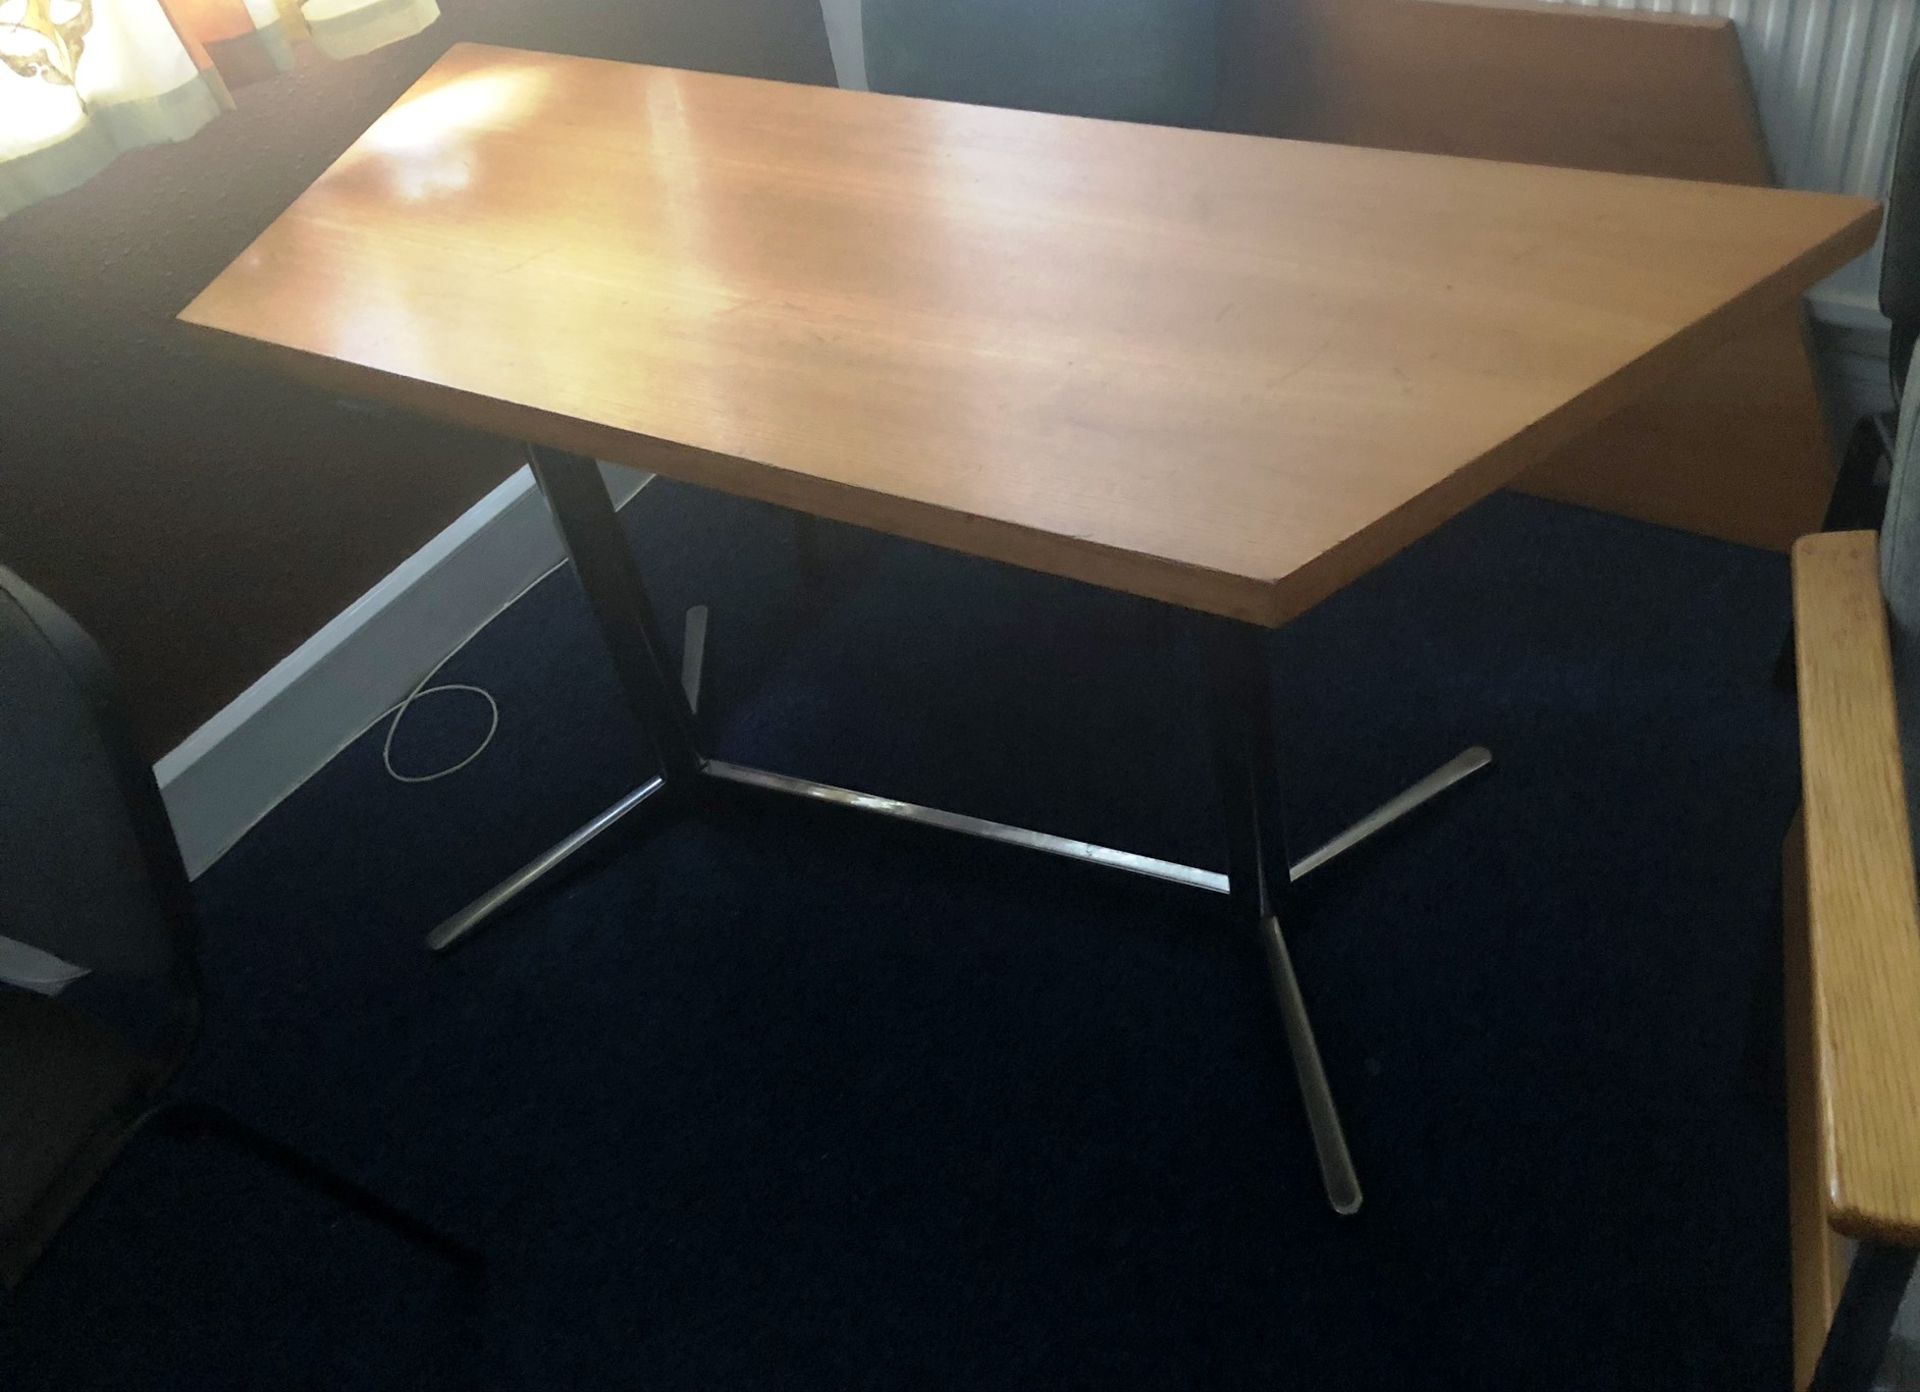 7 x Wooden Office Desks - Interchangeable - Image 3 of 3